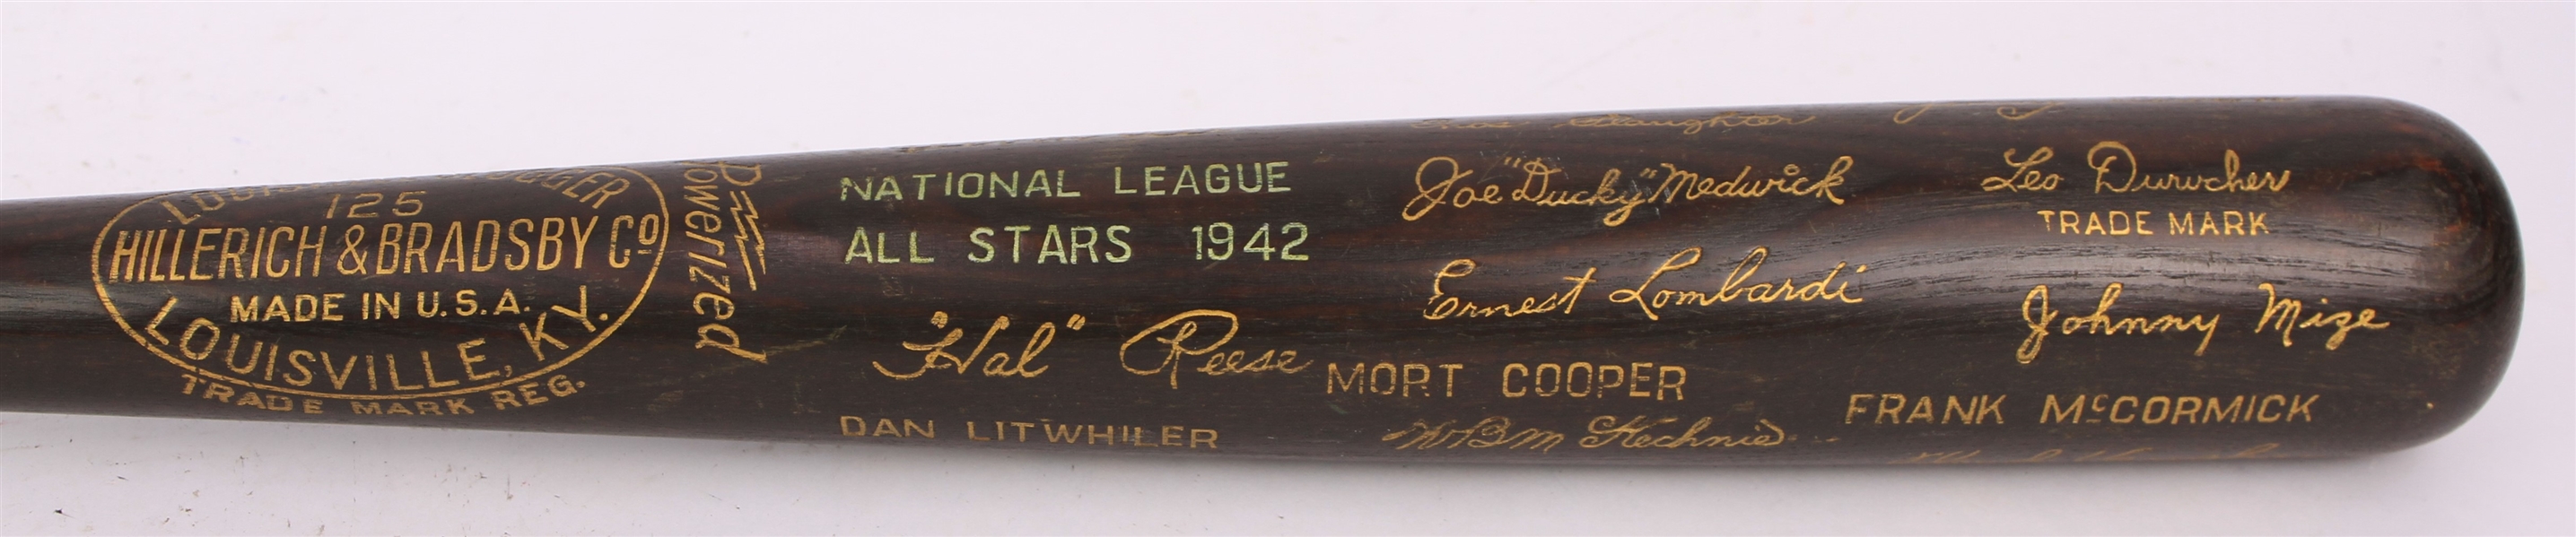 1942 National League All Stars H&B Louisville Slugger Commemorative Bat 